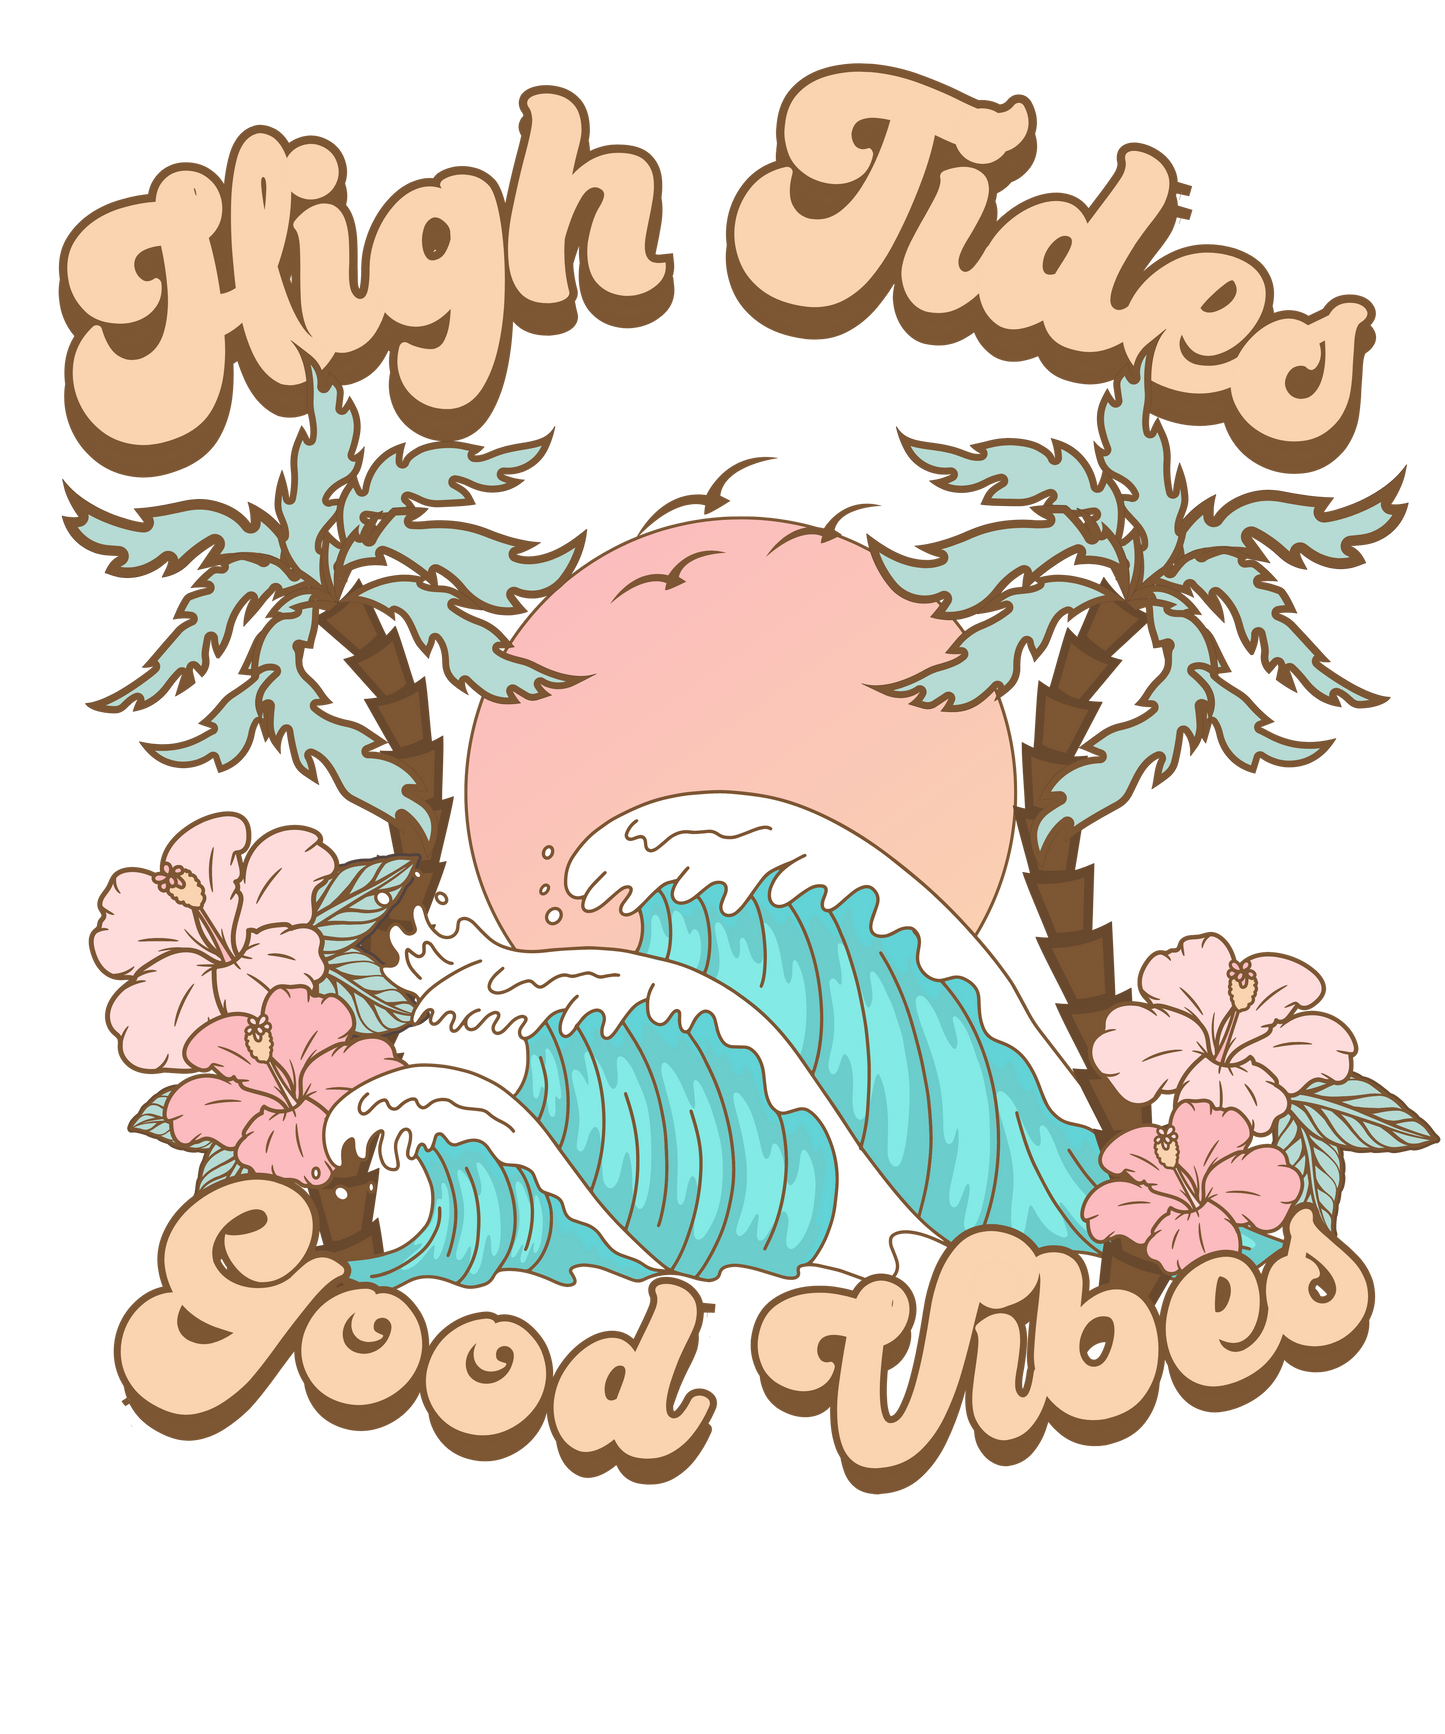 High Tides Good Vibes Logo